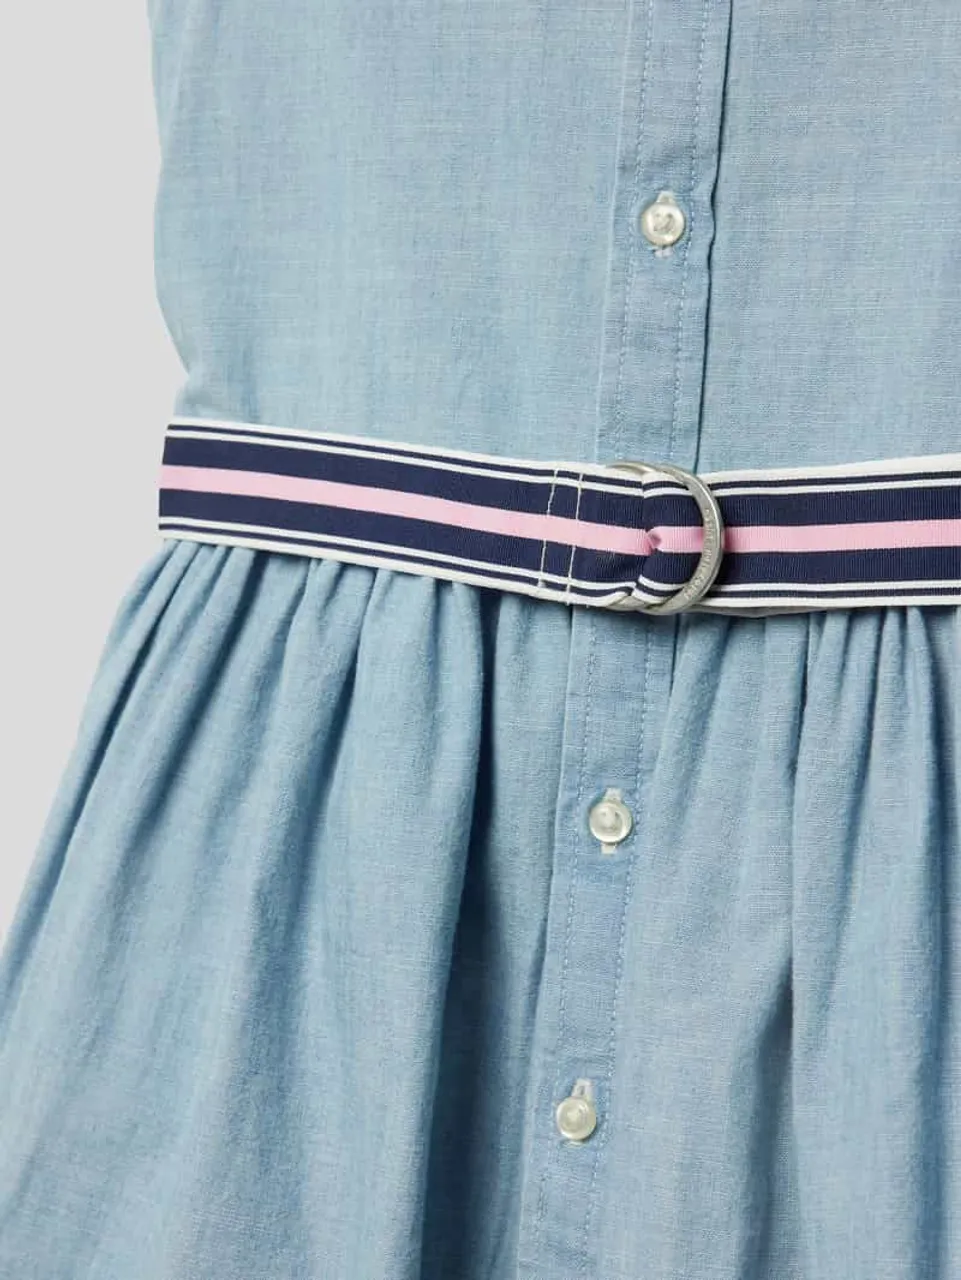 Polo Ralph Lauren Kids Kleid in Denim-Optik mit Gürtel in Hellblau